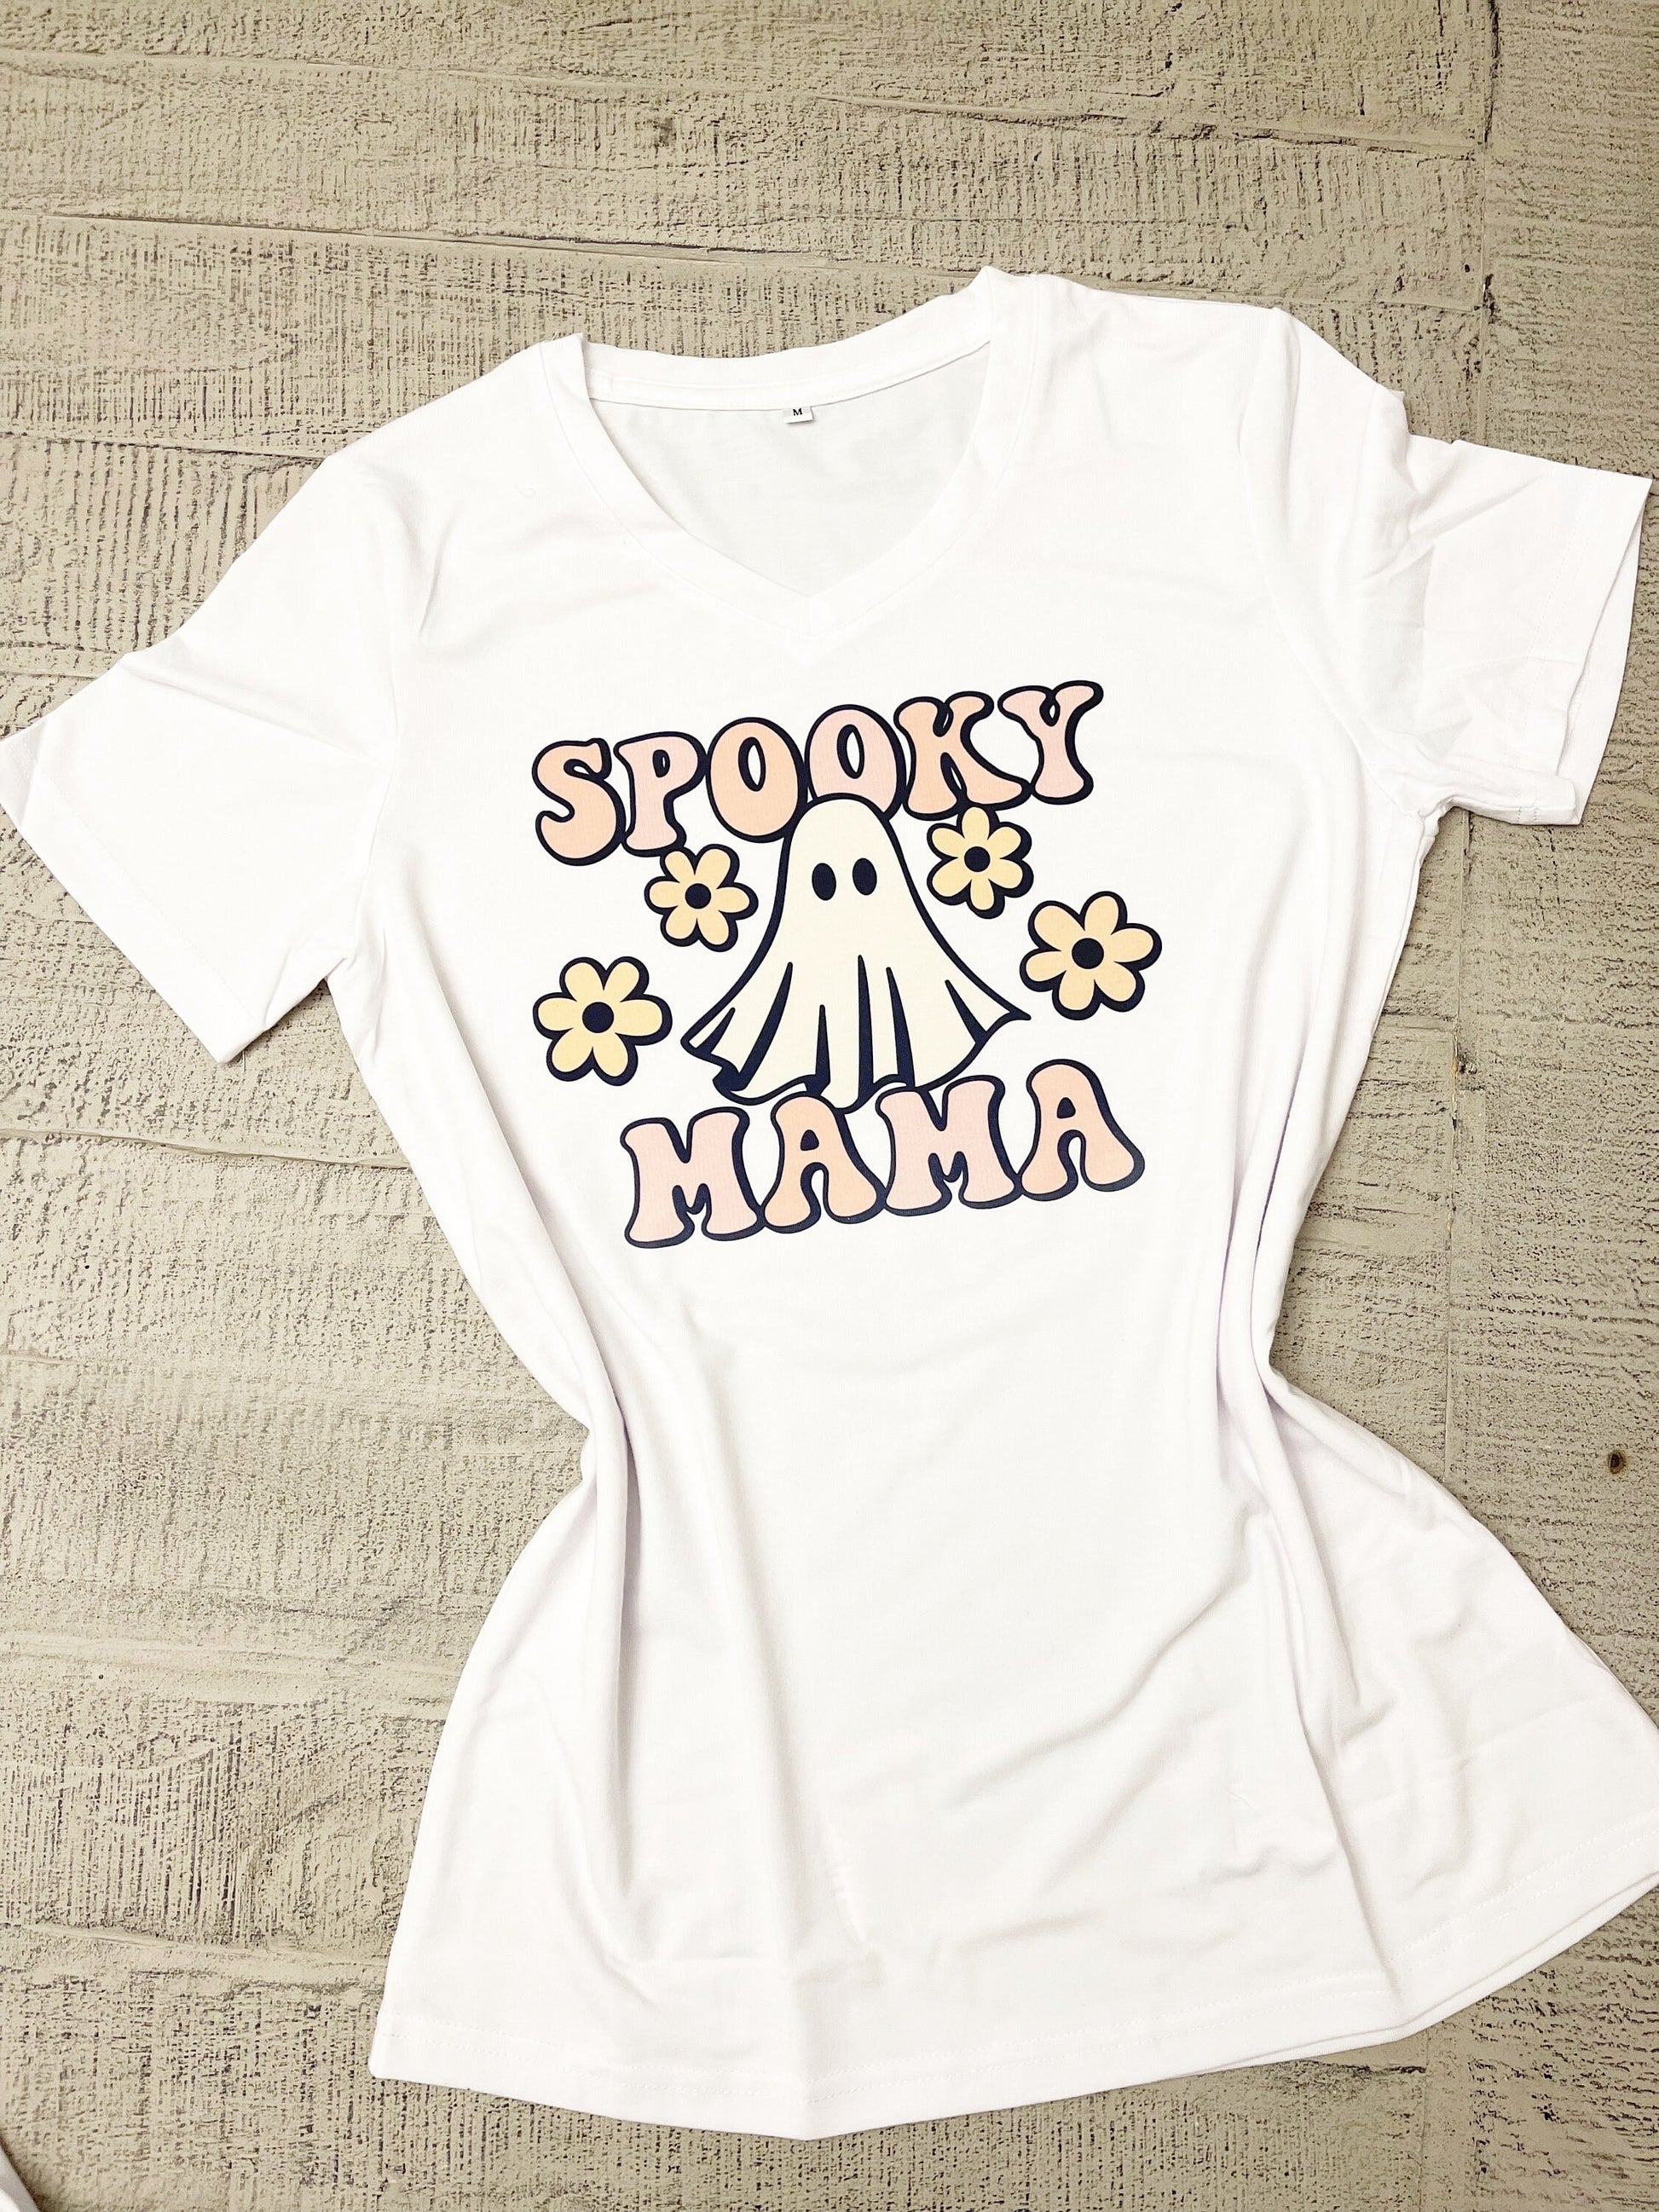 Spooky Season T-shirt, Retro Halloween t-shirt, Vintage Ghost Halloween Shirt, Retro Fall Shirt, Halloween Shirt, Spooky Season tee